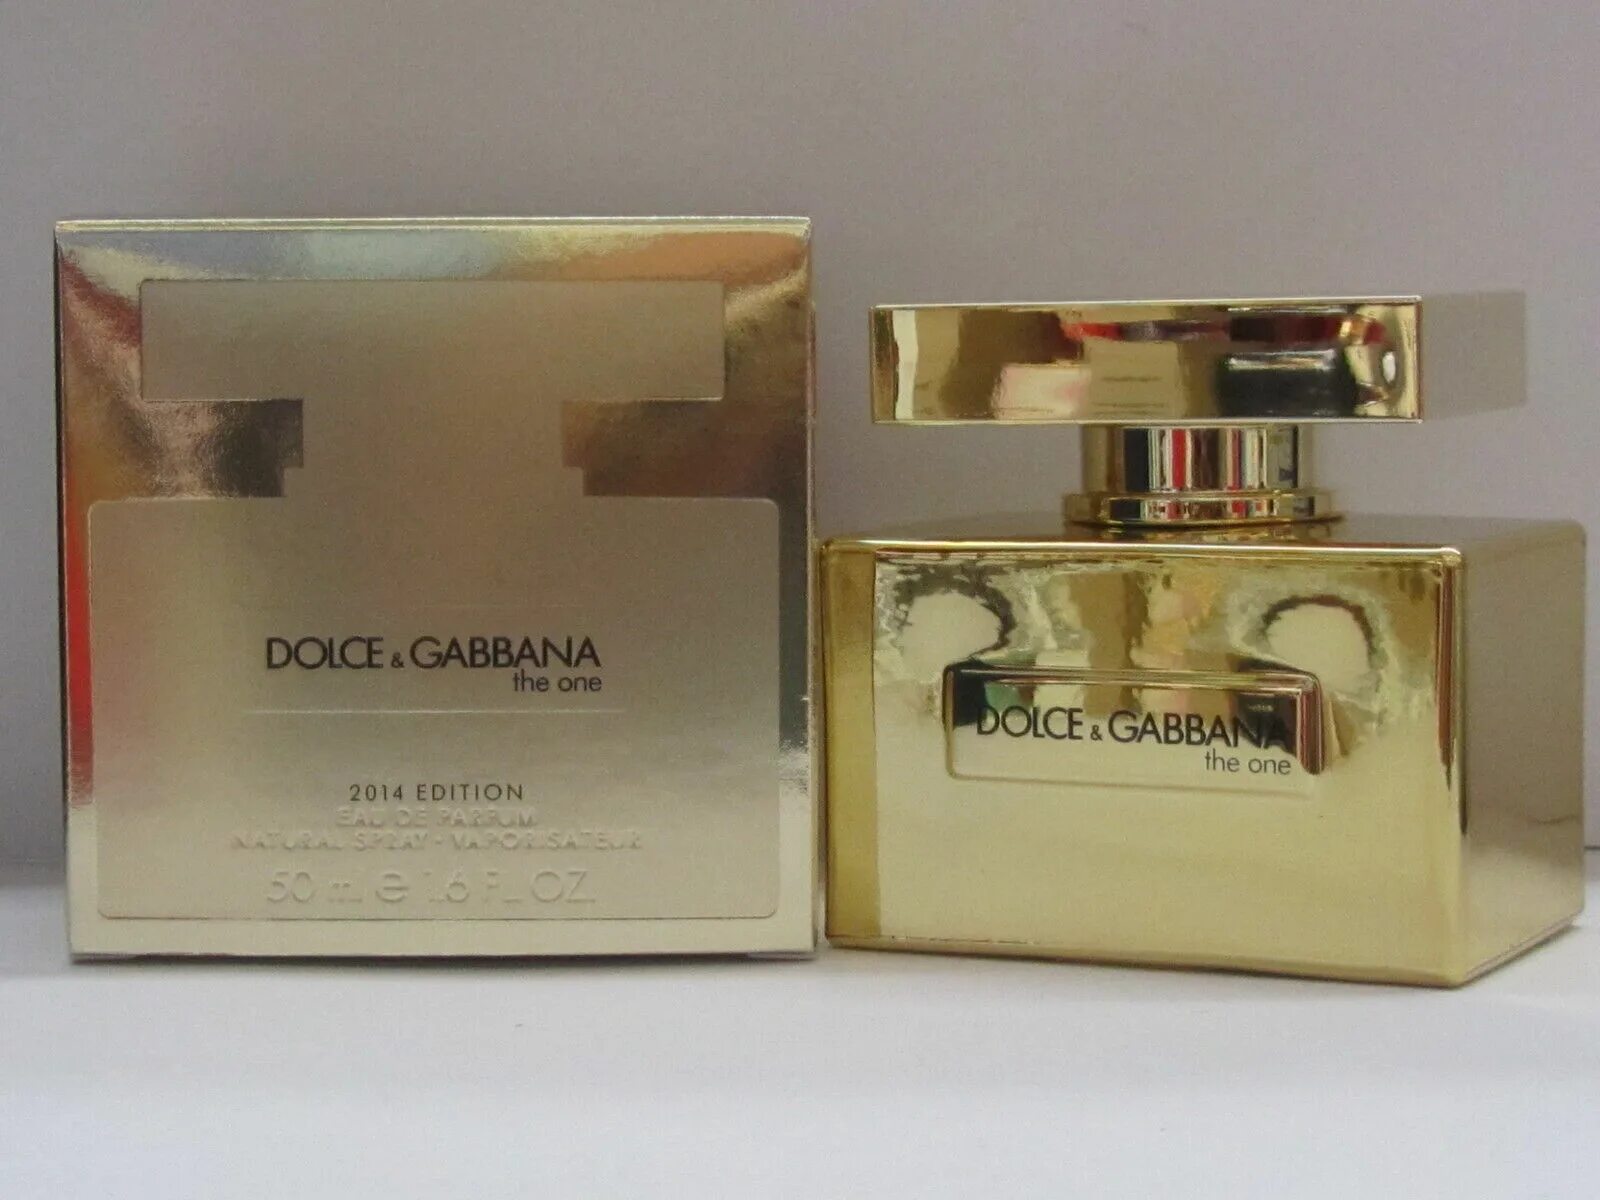 Дольче габбана духи золотые. Духи Gold Dolce Gabbana the one. Dolce Gabbana the one Gold intense 30 ml. Dolche Gabbana the one Gold. Gold Dolce Gabbana the one 75 ml.